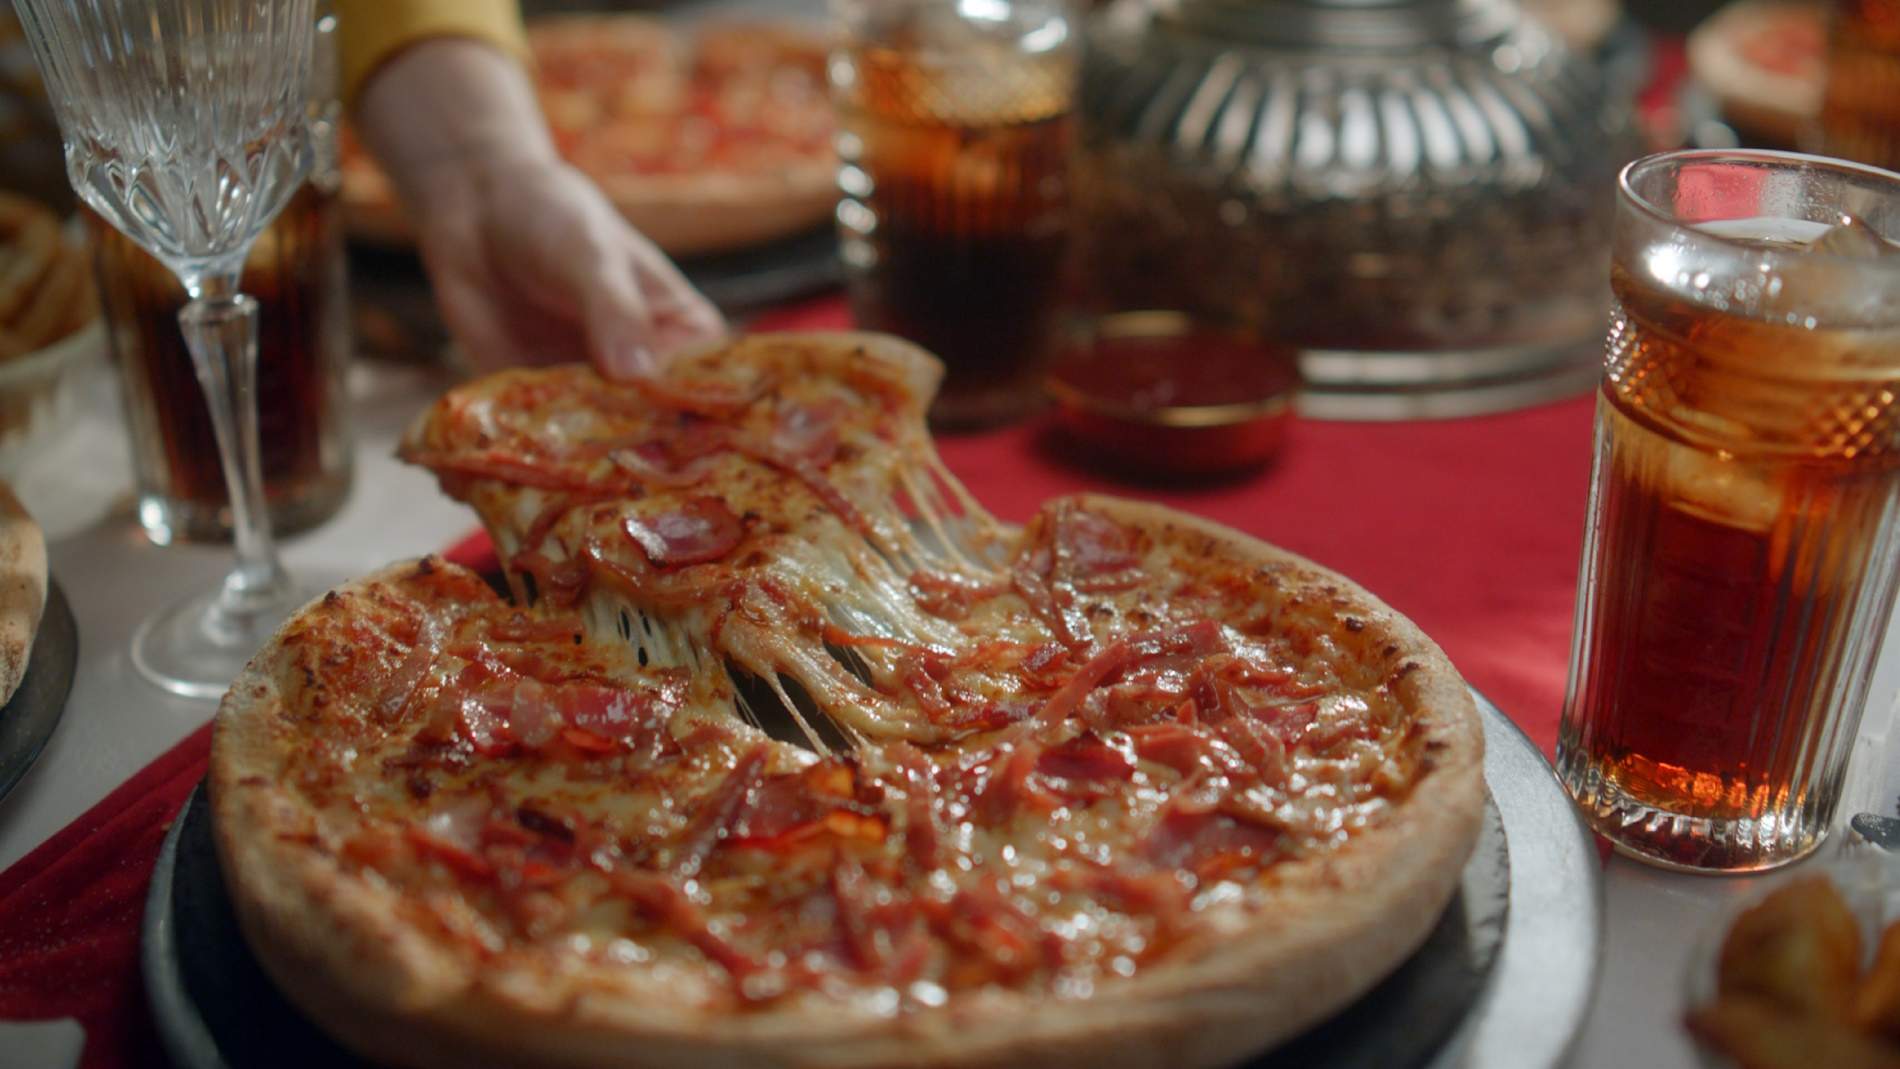 Telepizza lanza una nueva gama de pizzas premium